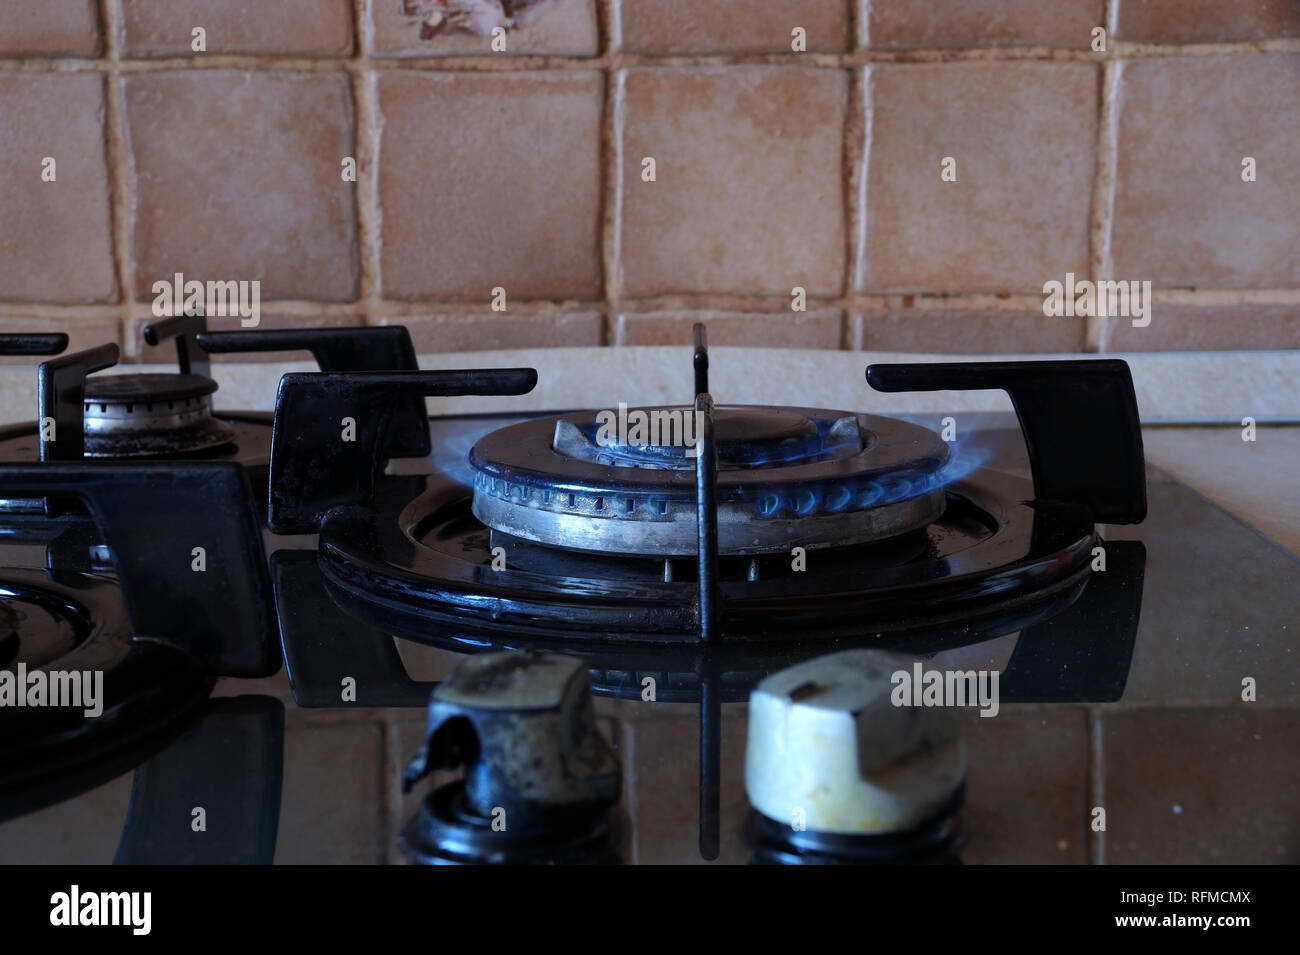 Tri-Ring Burner with 20k BTUs | Monogram Gas Cooktops - YouTube